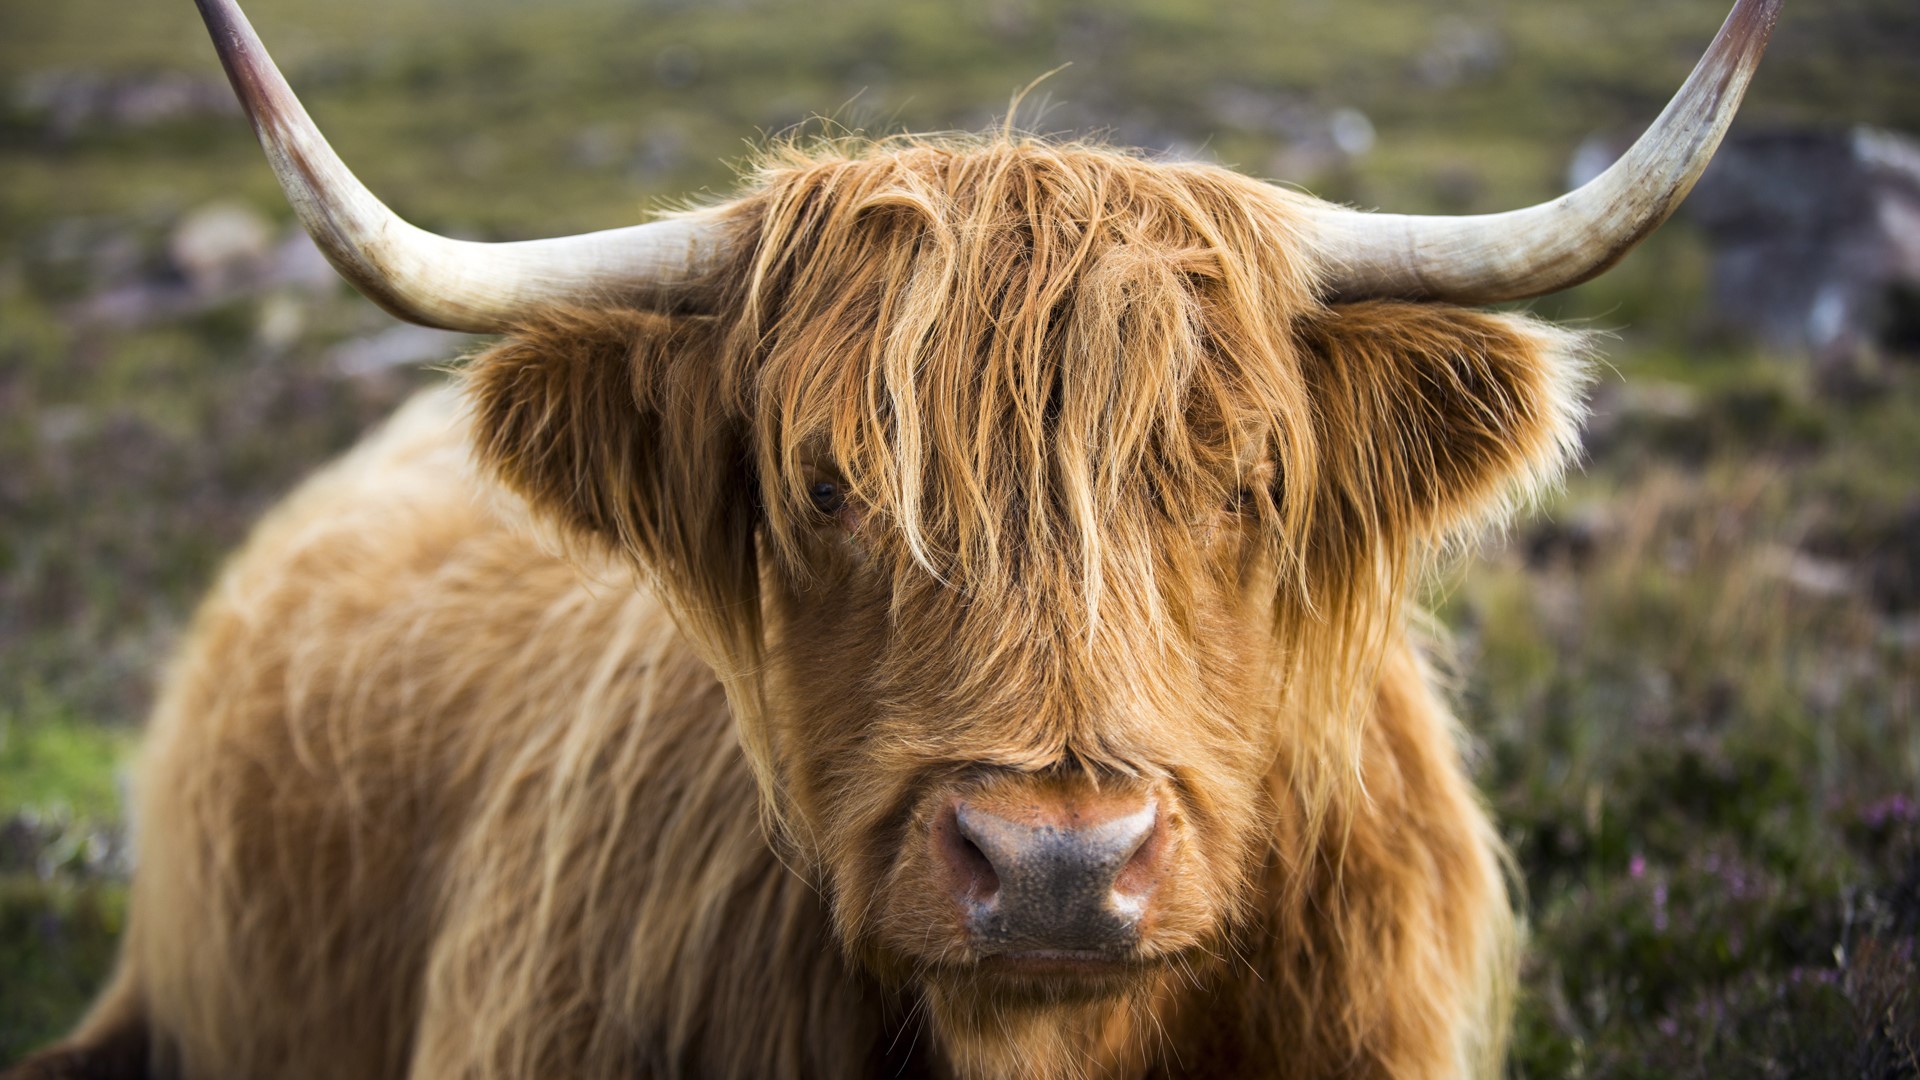 Highland cow, Applecross Peninsula, Scotland, UK. Windows 10 Spotlight Image